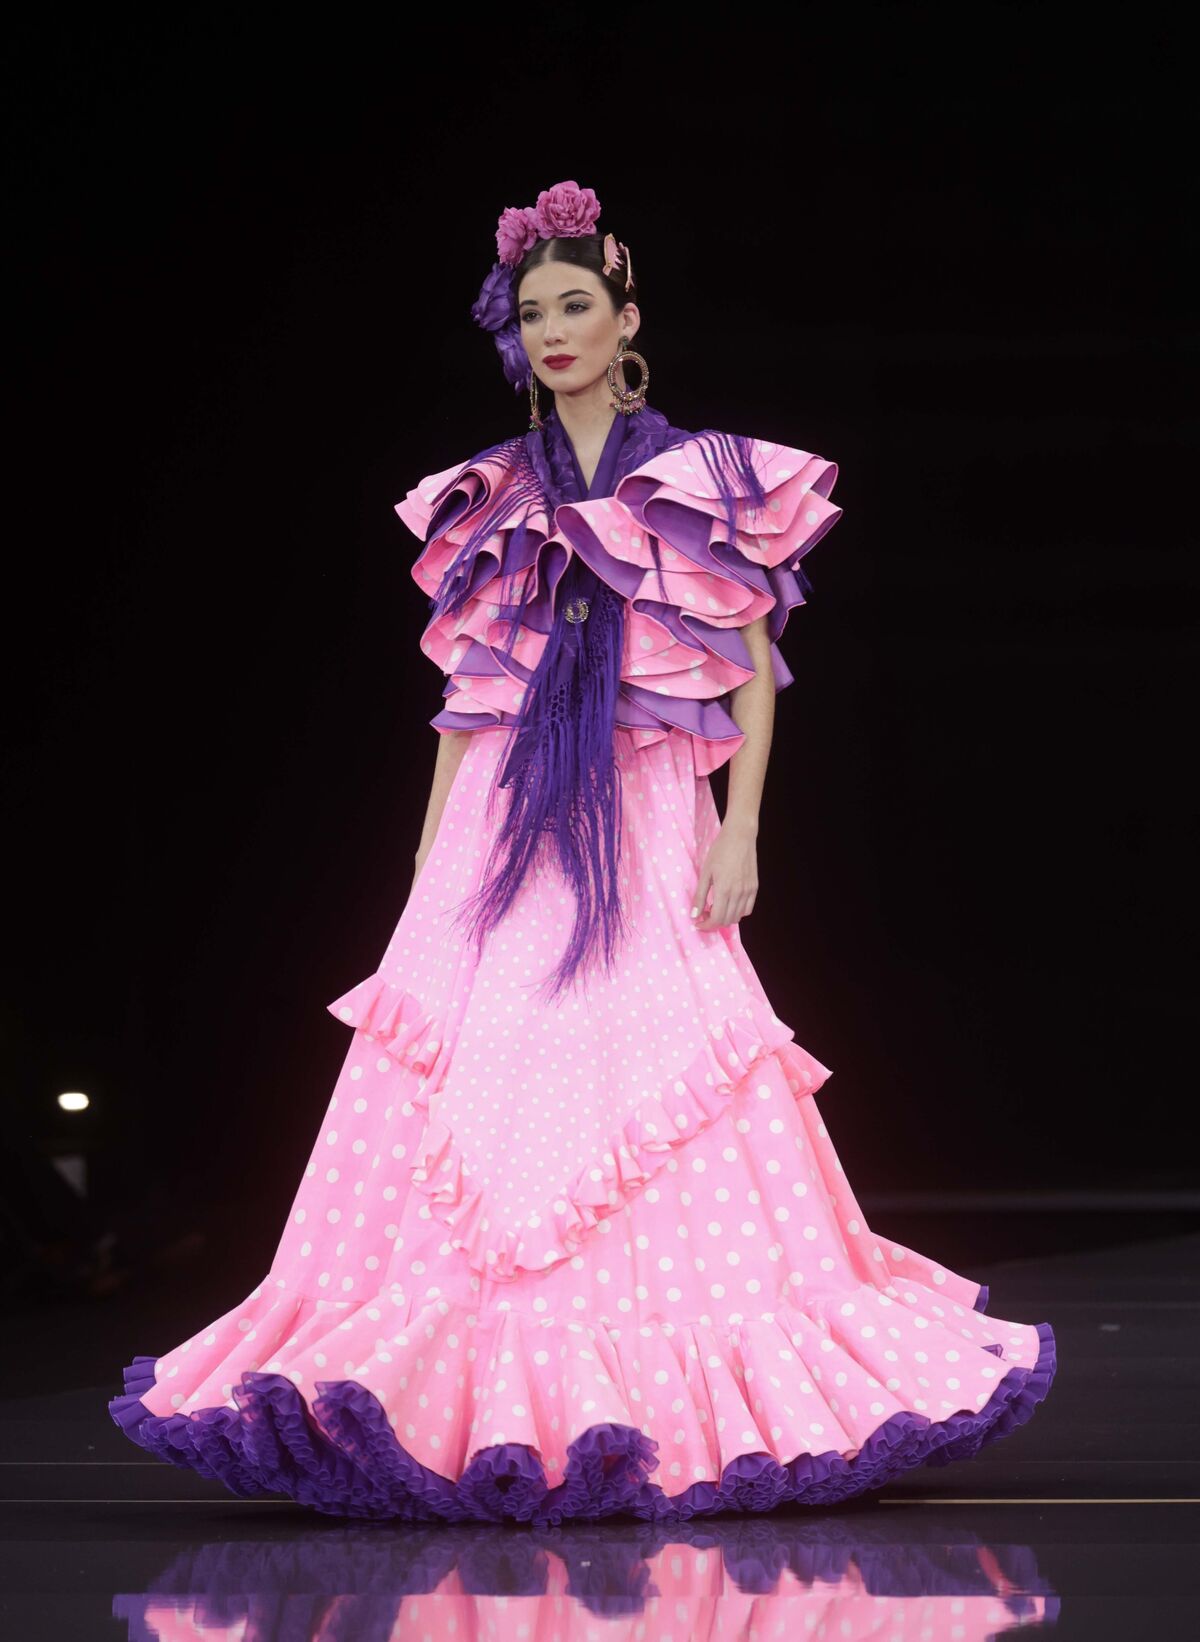 Falda Flamenca Rosa para Mujer